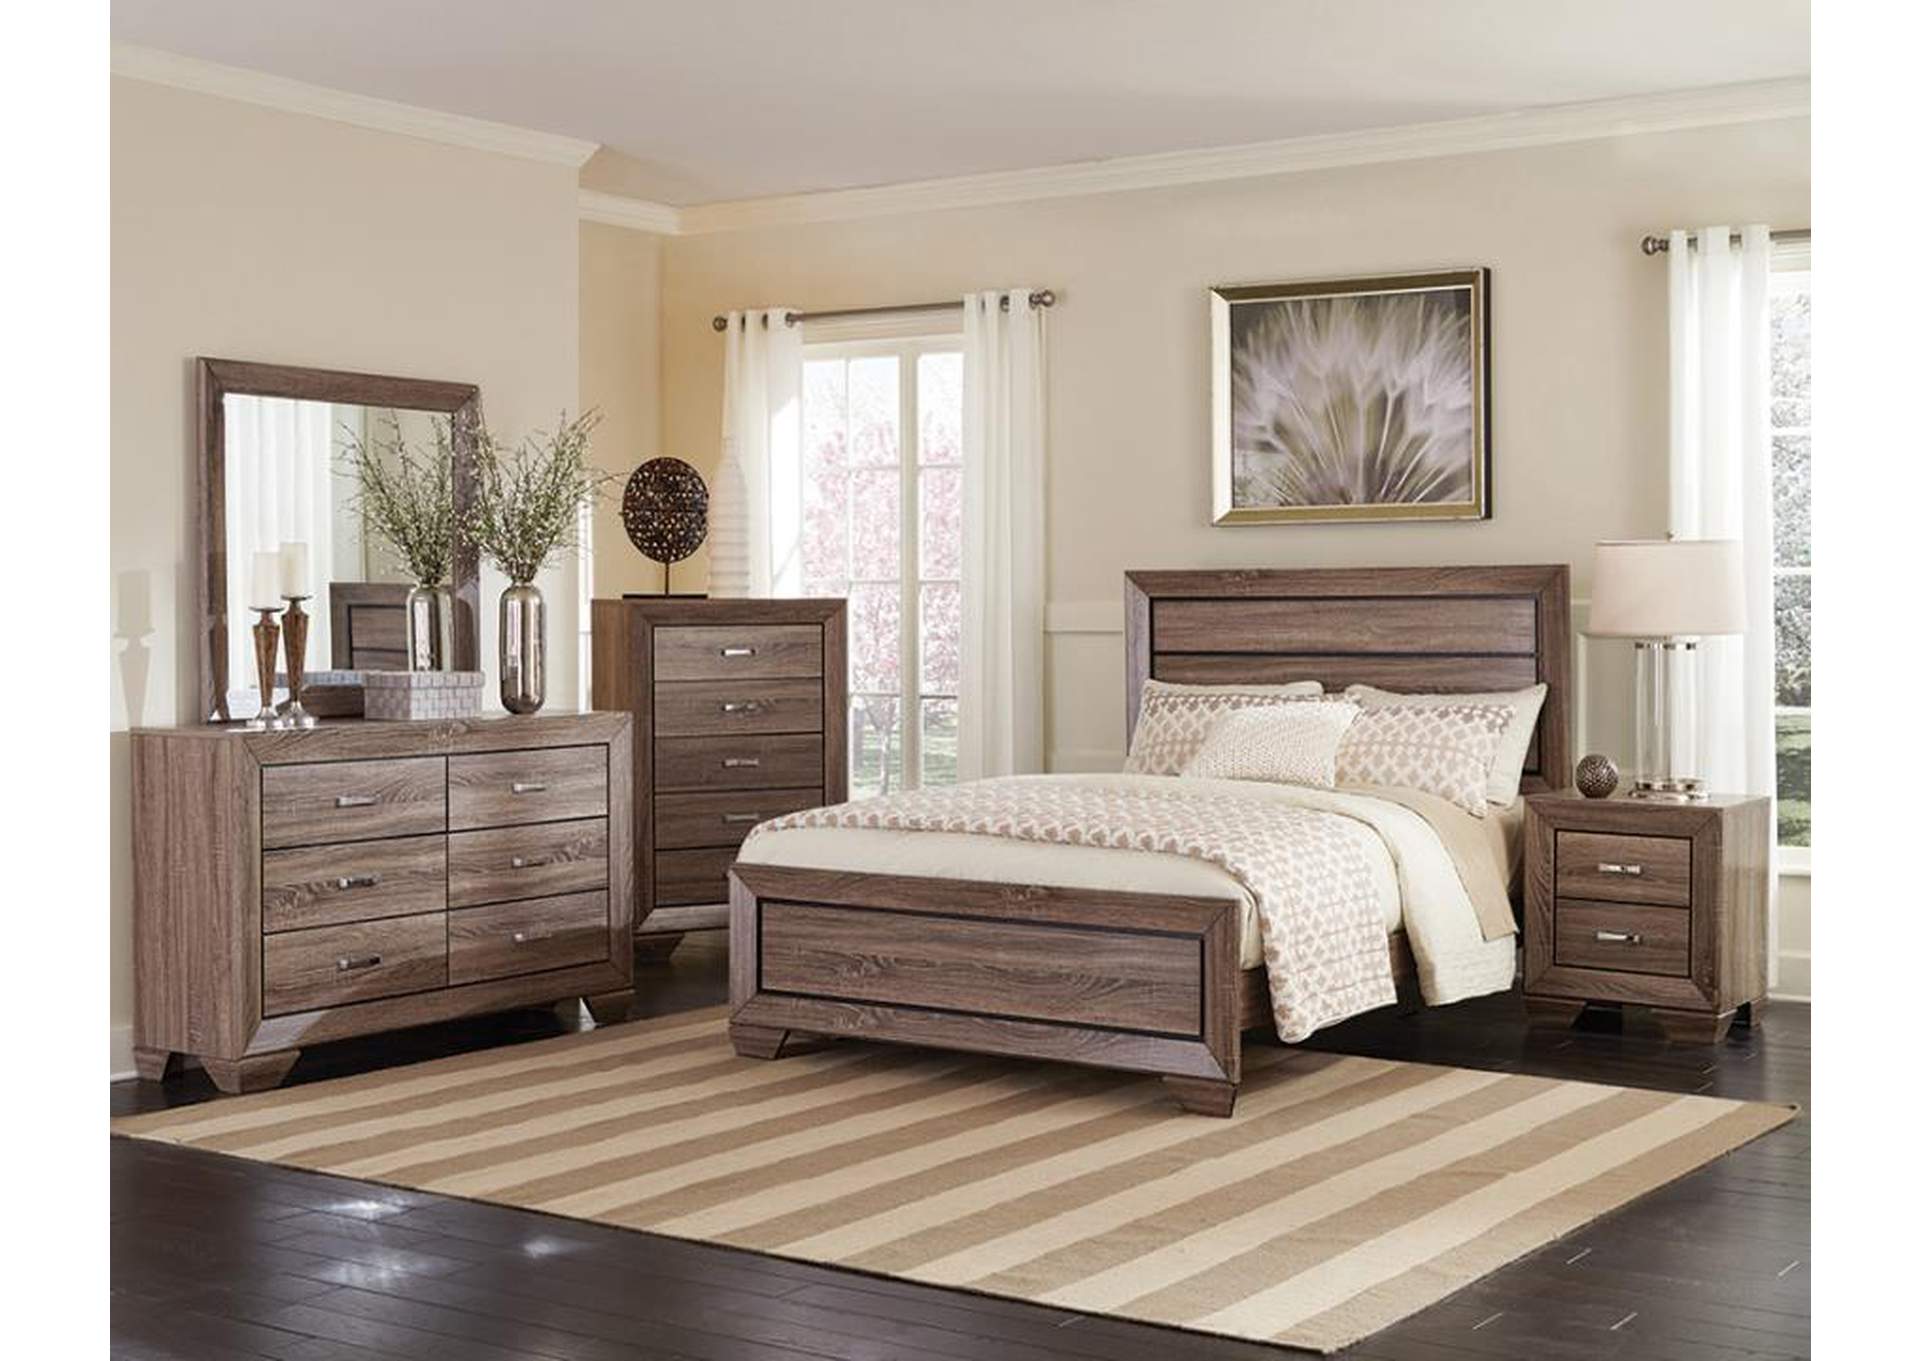 Kauffman Bedroom Set With High Straight Headboard,Coaster Furniture